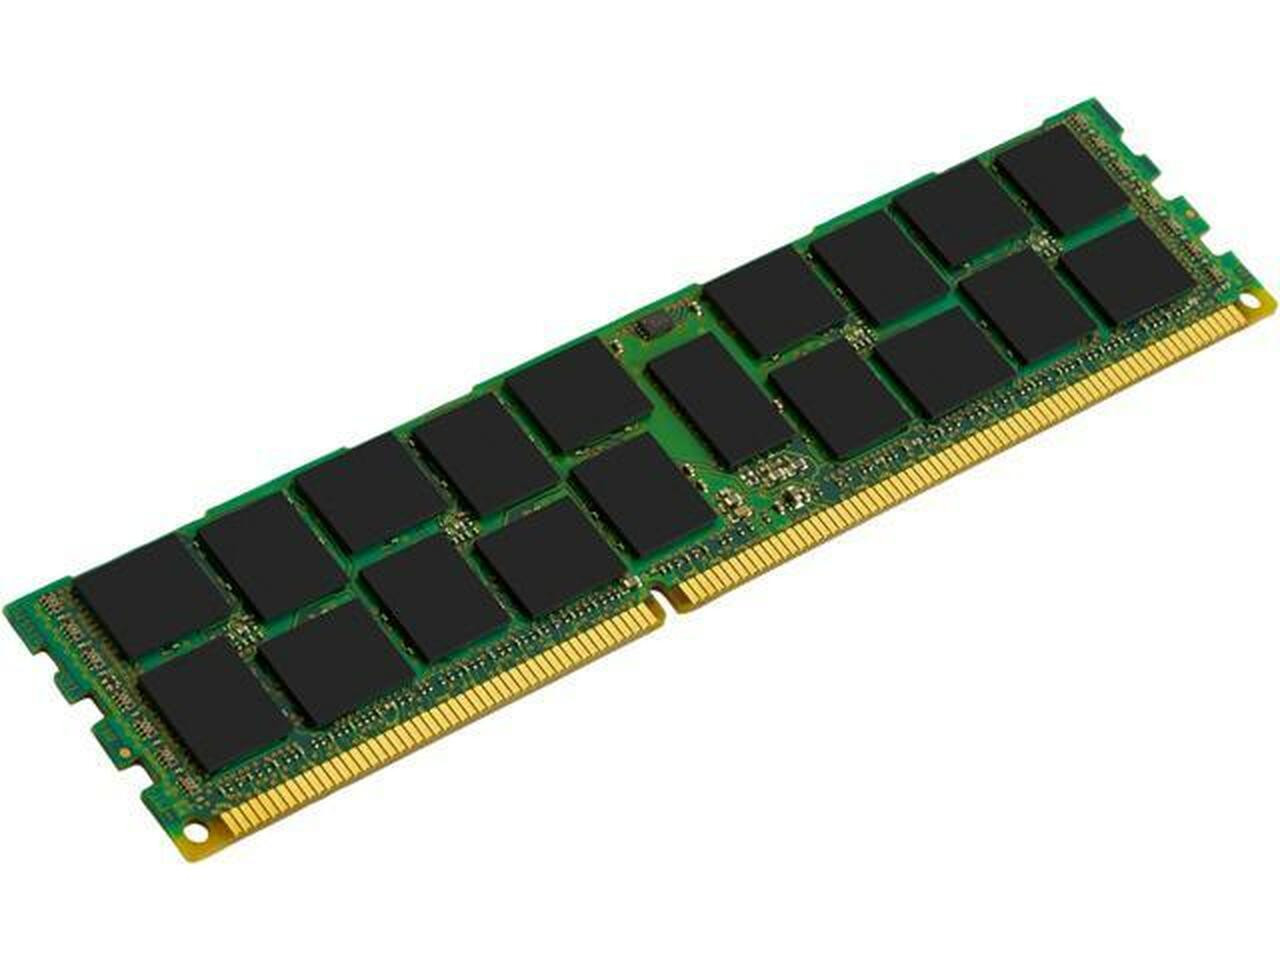 Netpatibles 4GB DDR3 SDRAM Memory Module - MEMDR340LSL05ER13NPM